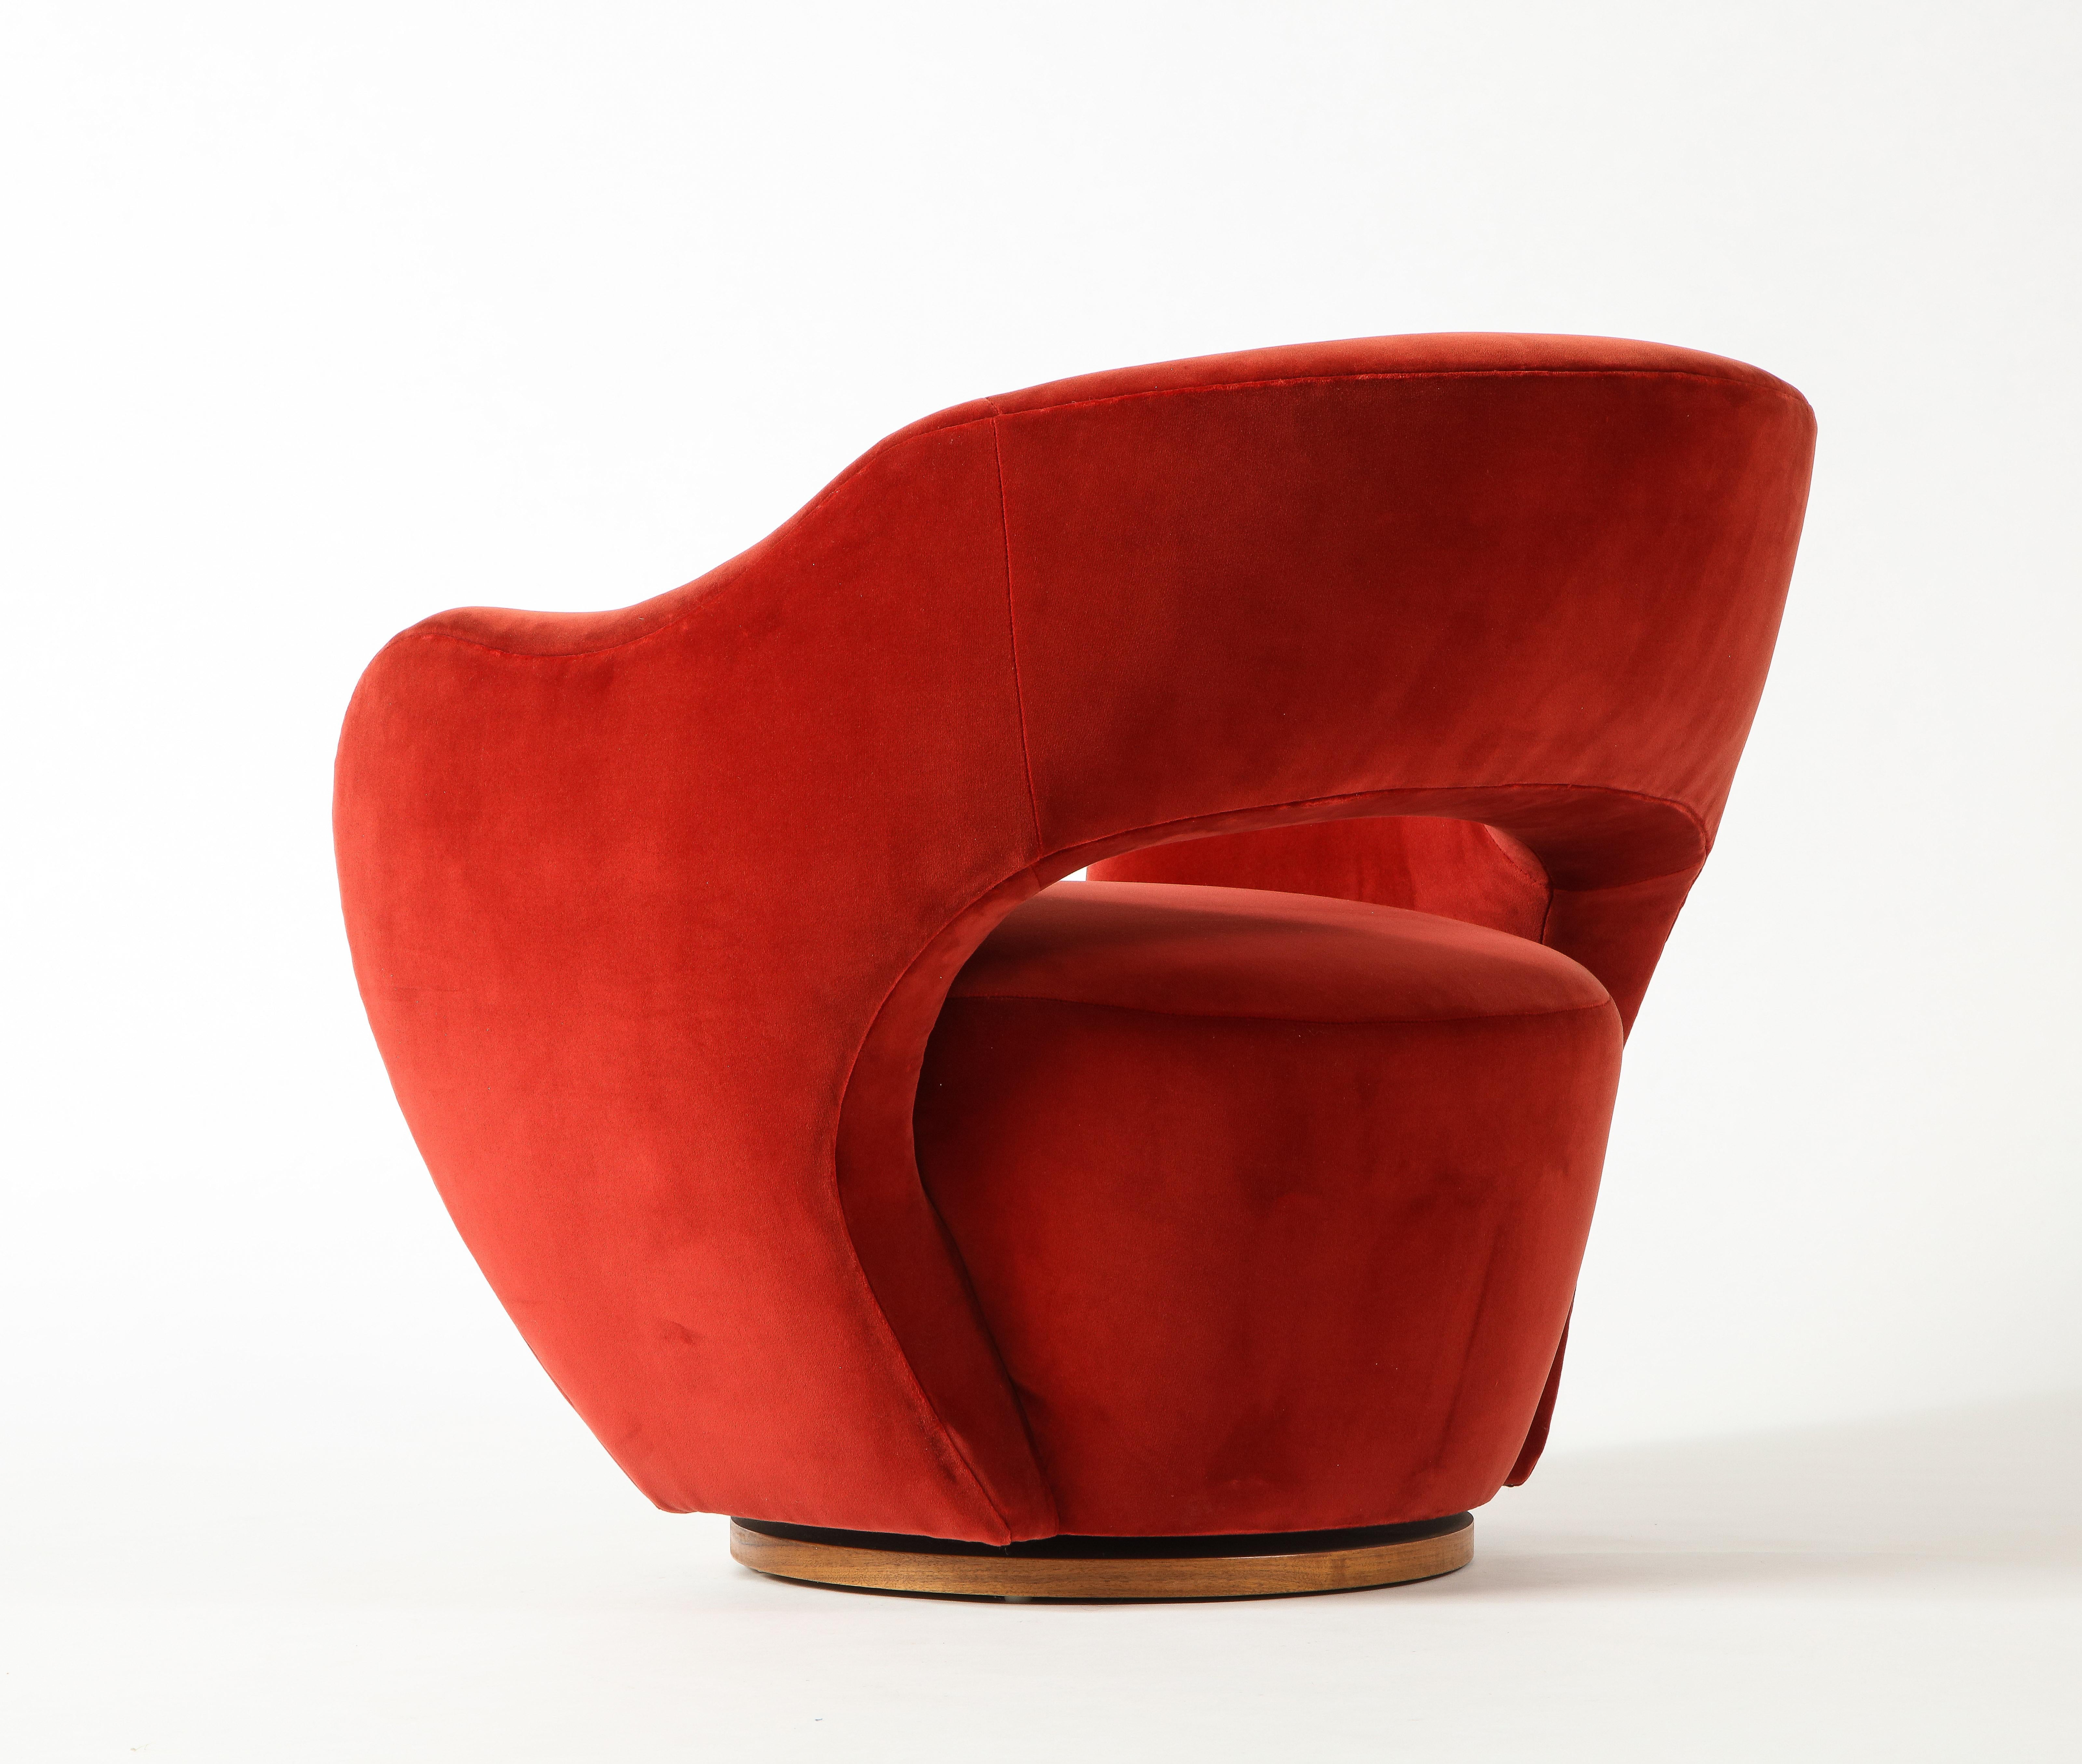 Vladimir Kagan Wysiwyg Chair with Red Upholstery & Natural Walnut Swivel Base 1